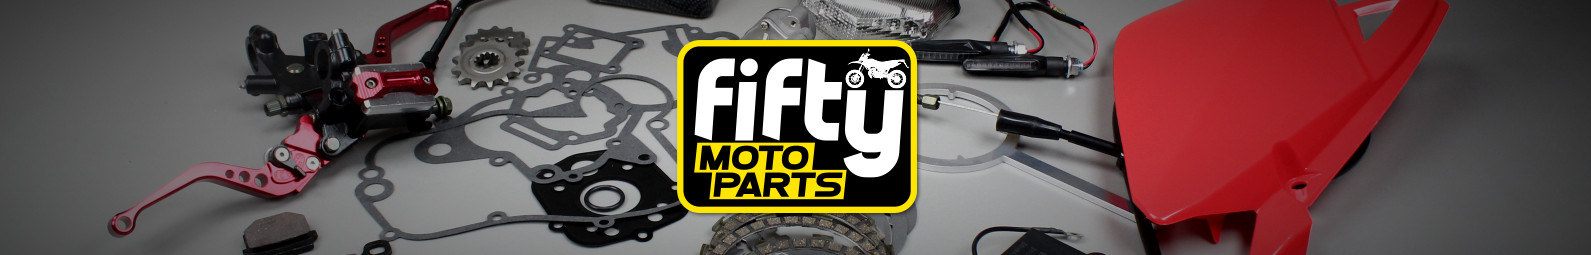 Motorrad Roller Teile Fifty moto parts